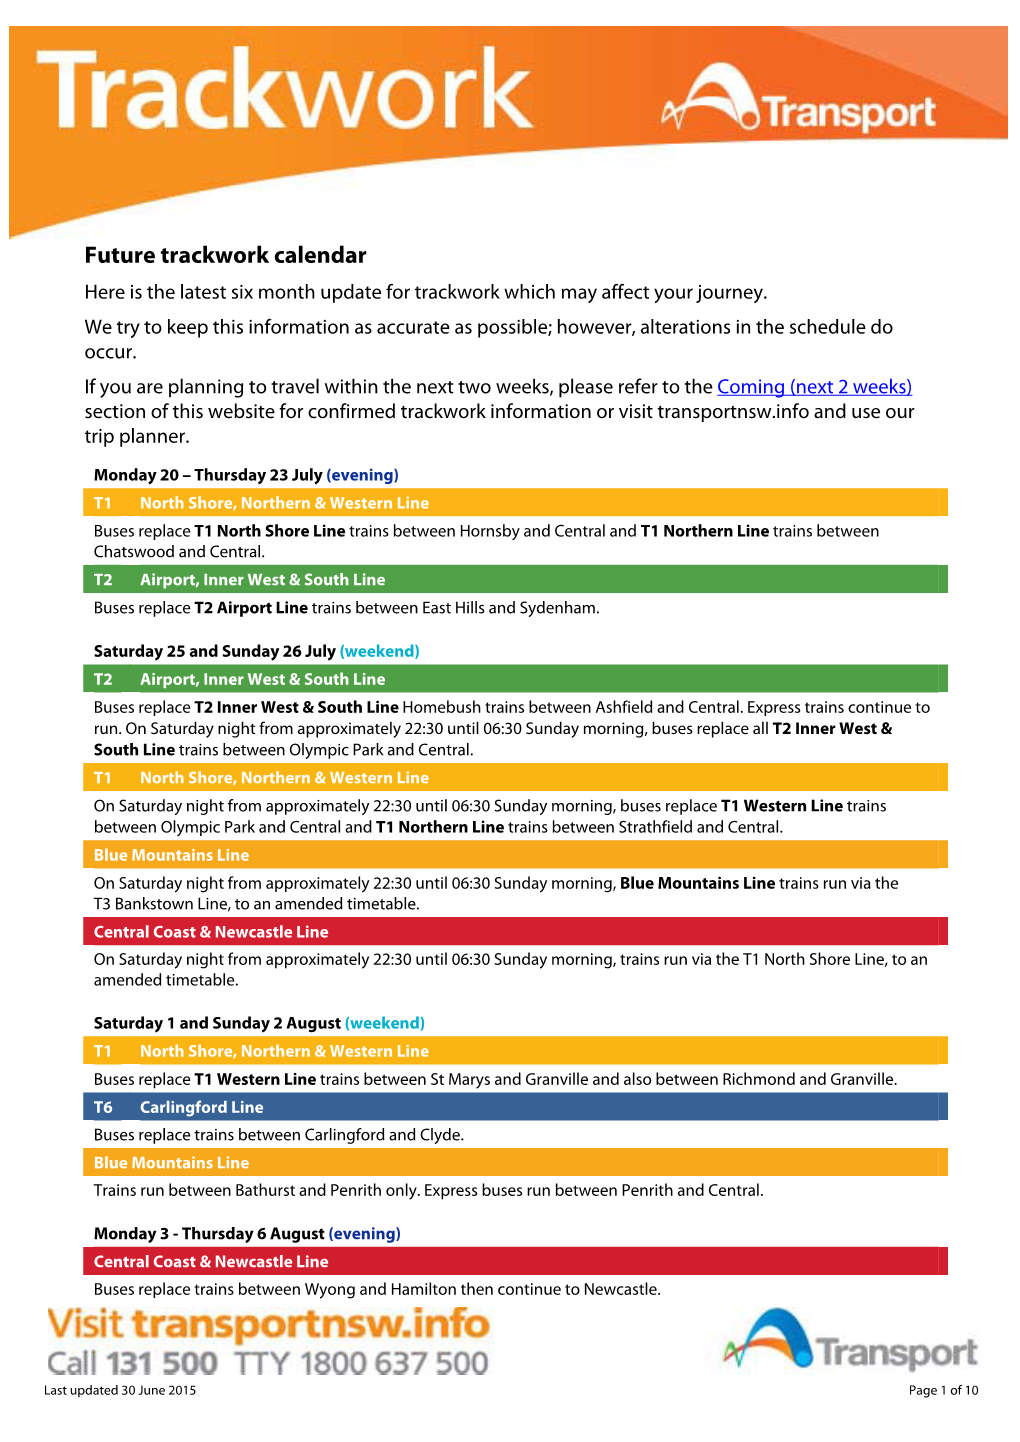 Cityrail Future Trackwork Calendar